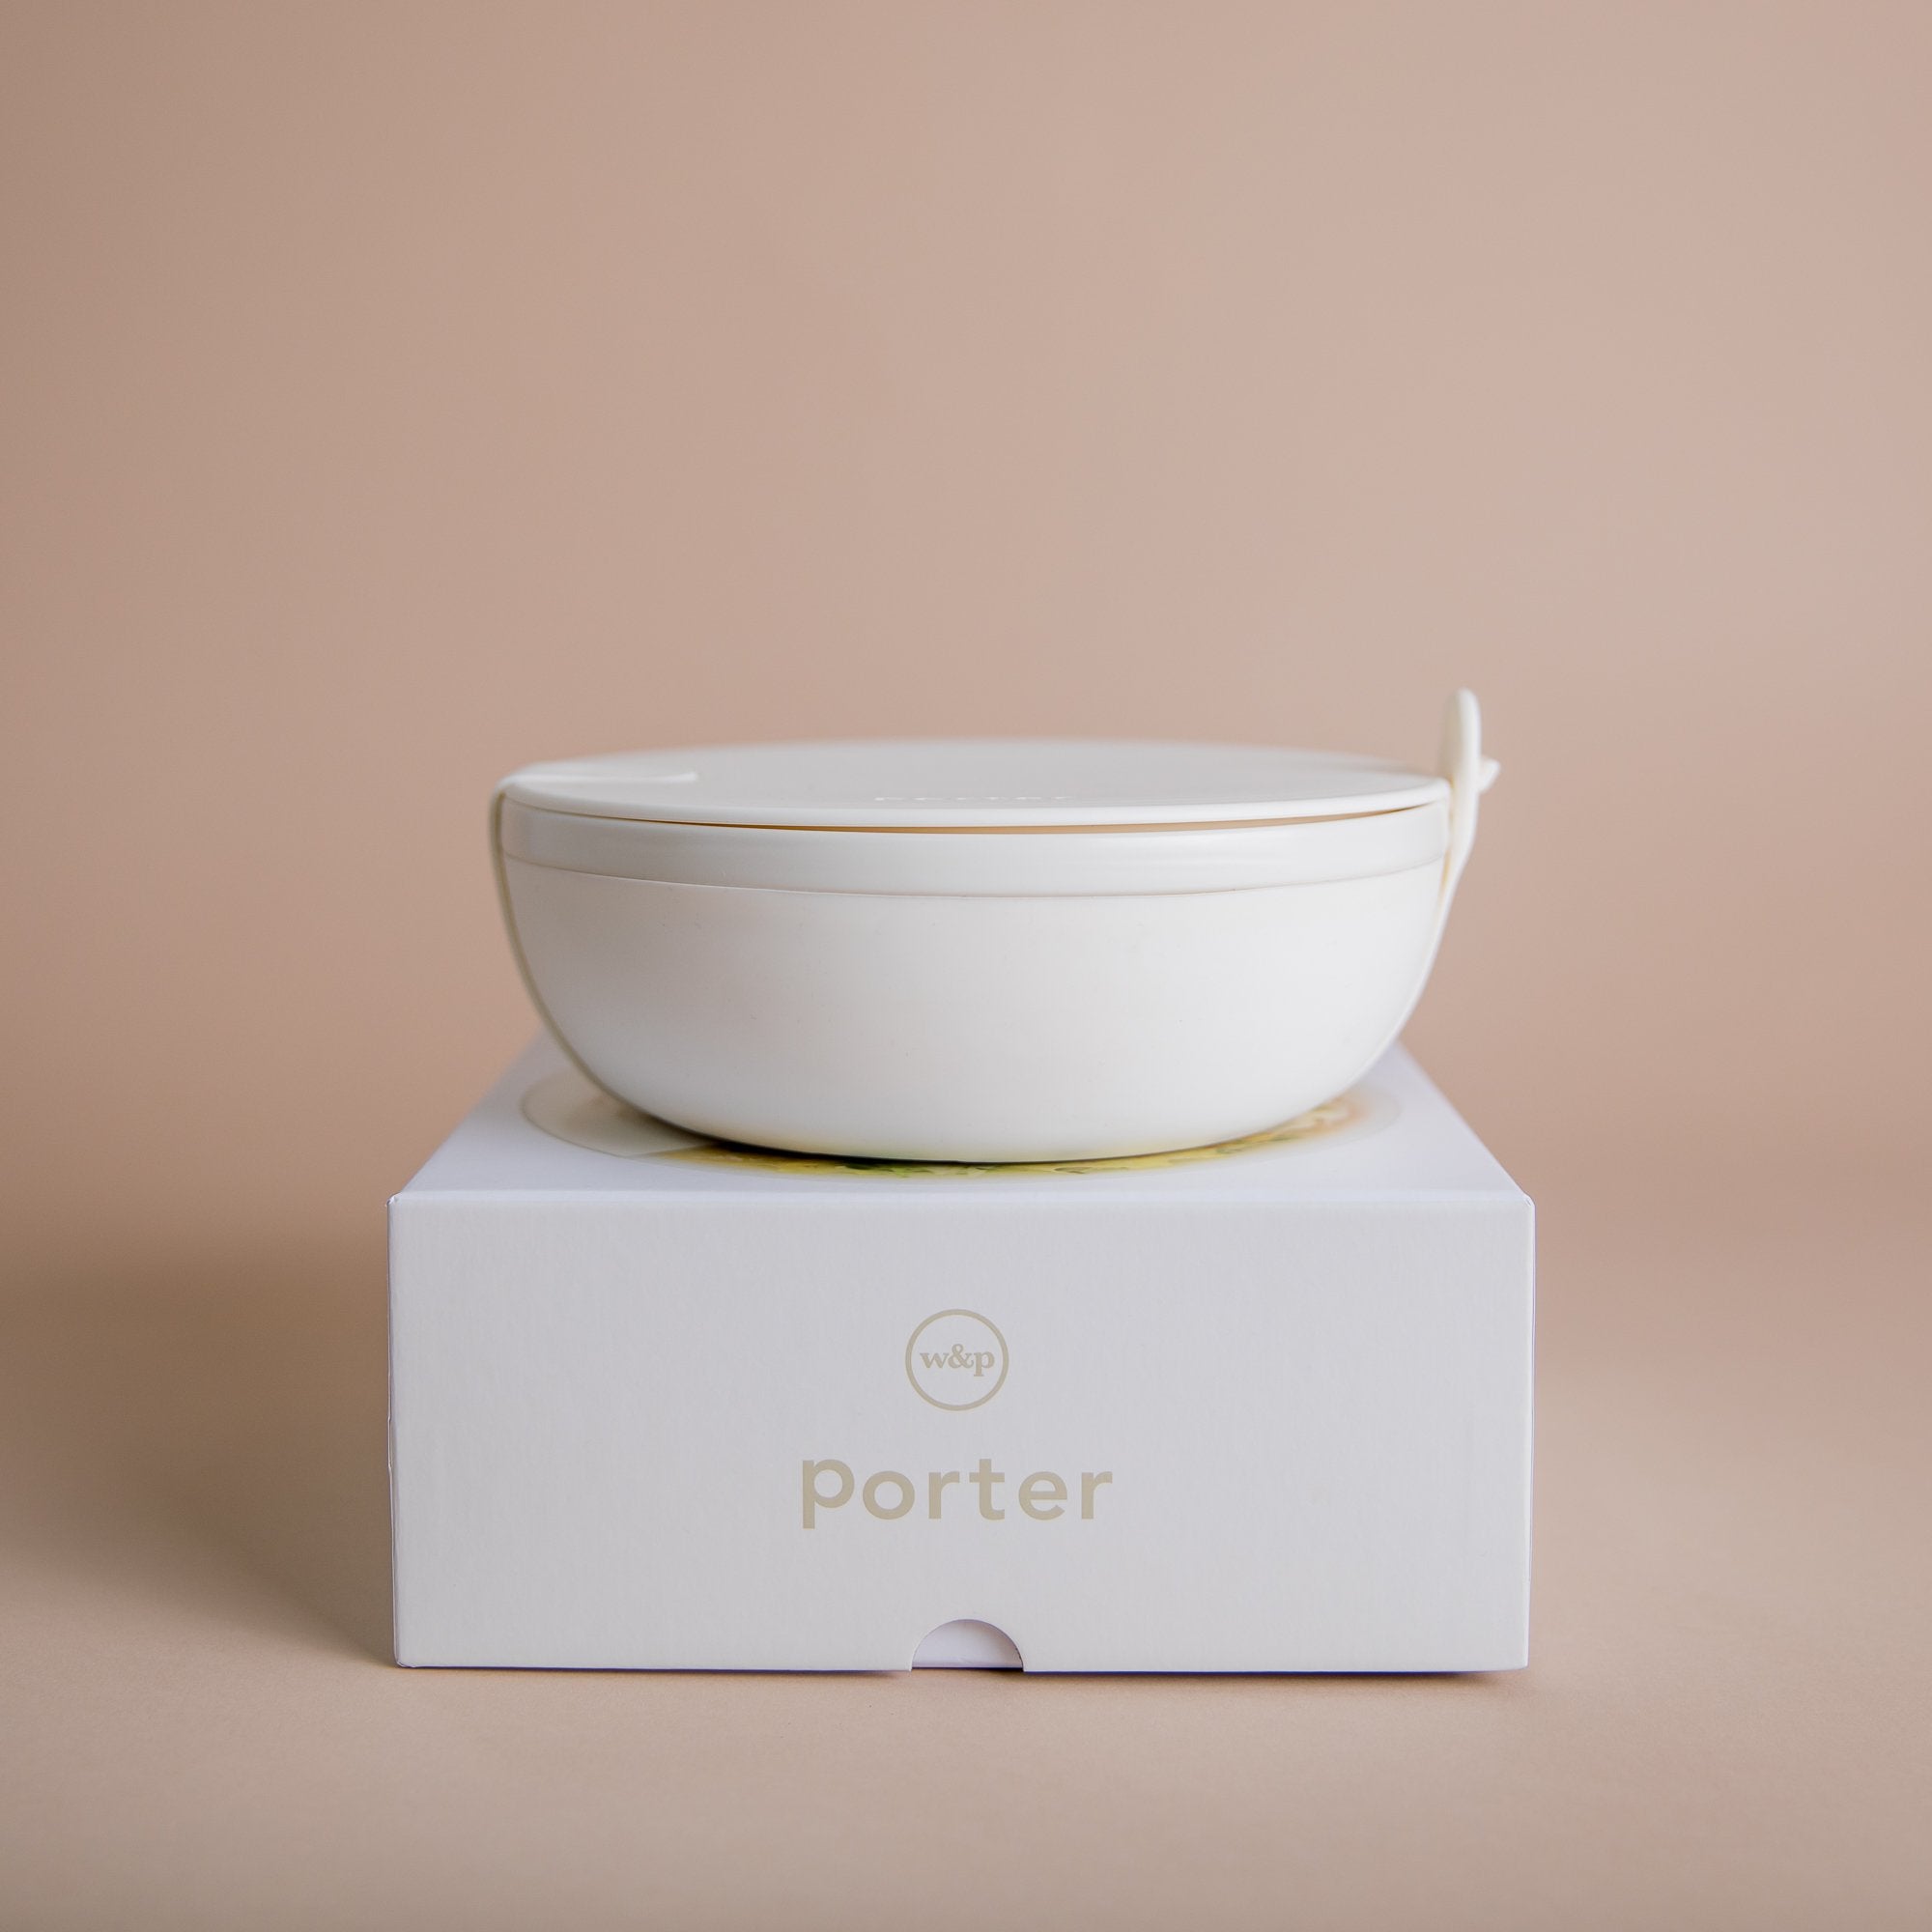 W&P Porter Ceramic Lunch Bowl